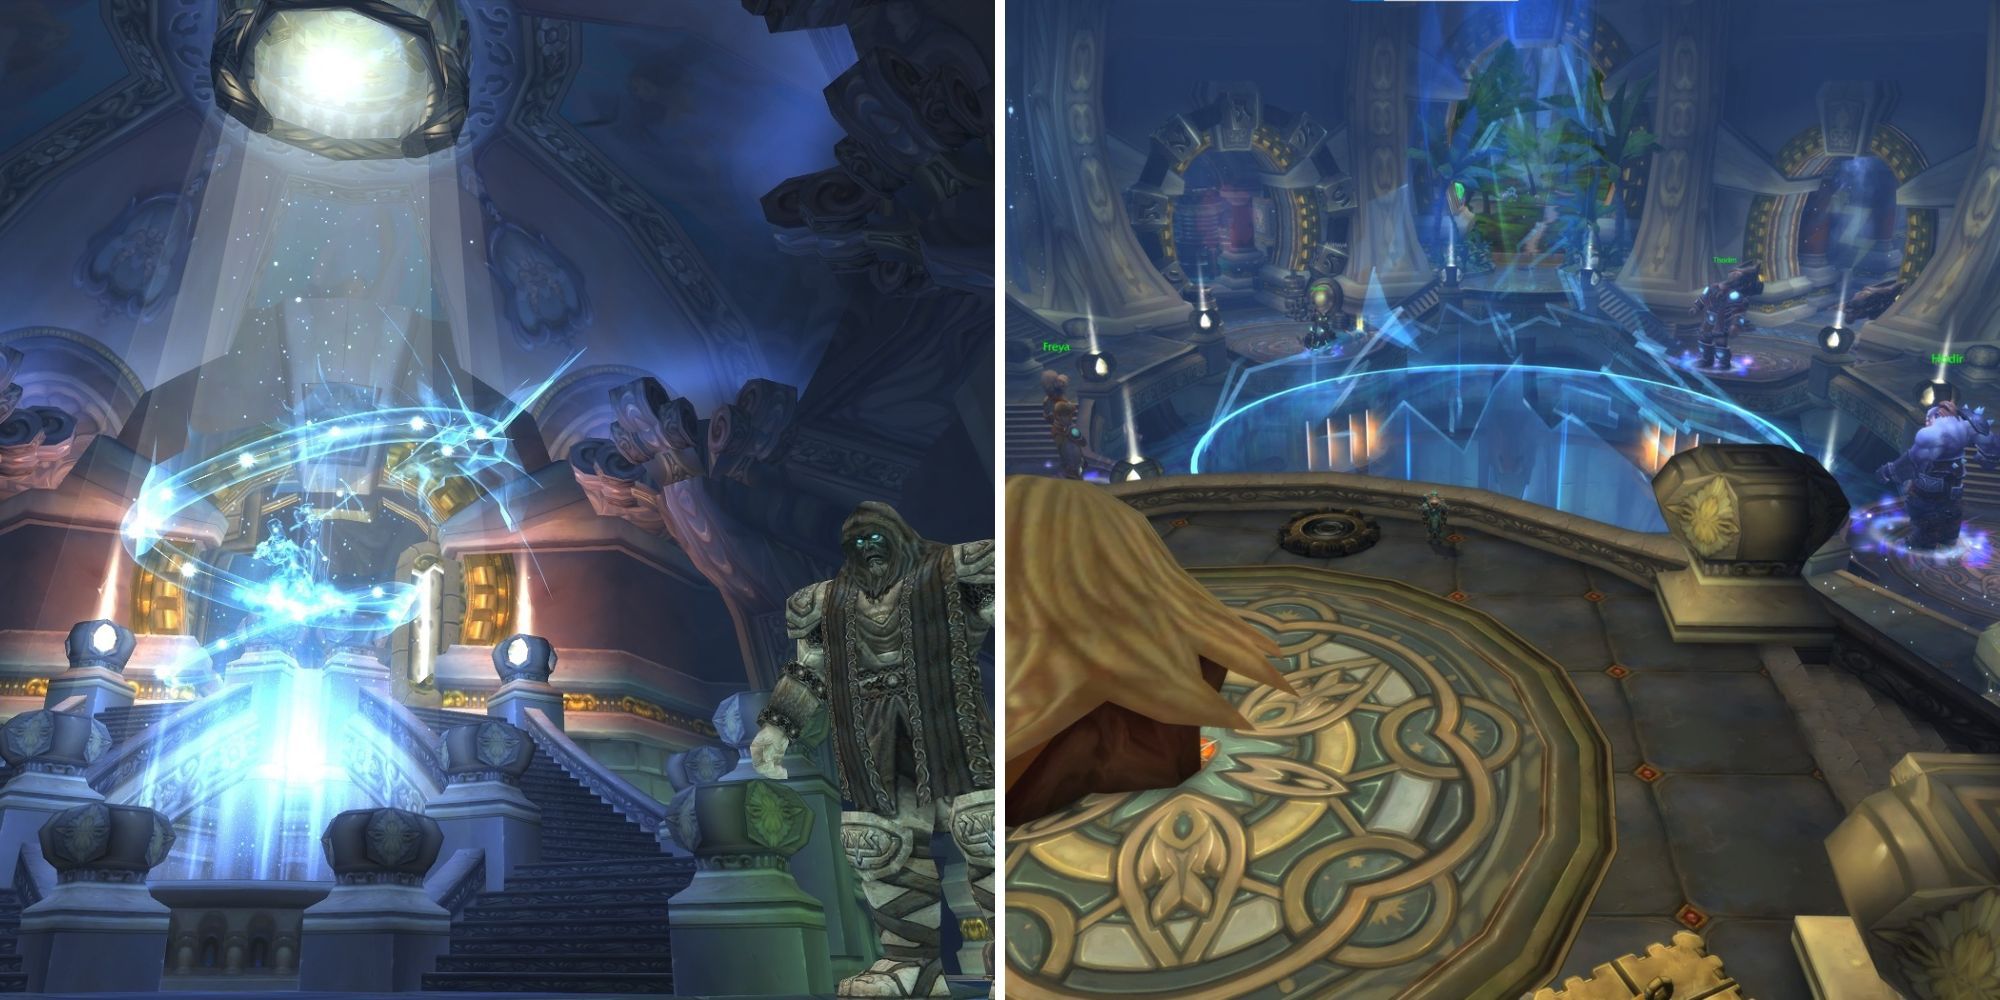 Voldrethar, Dark Blade of Oblivion - Item - World of Warcraft